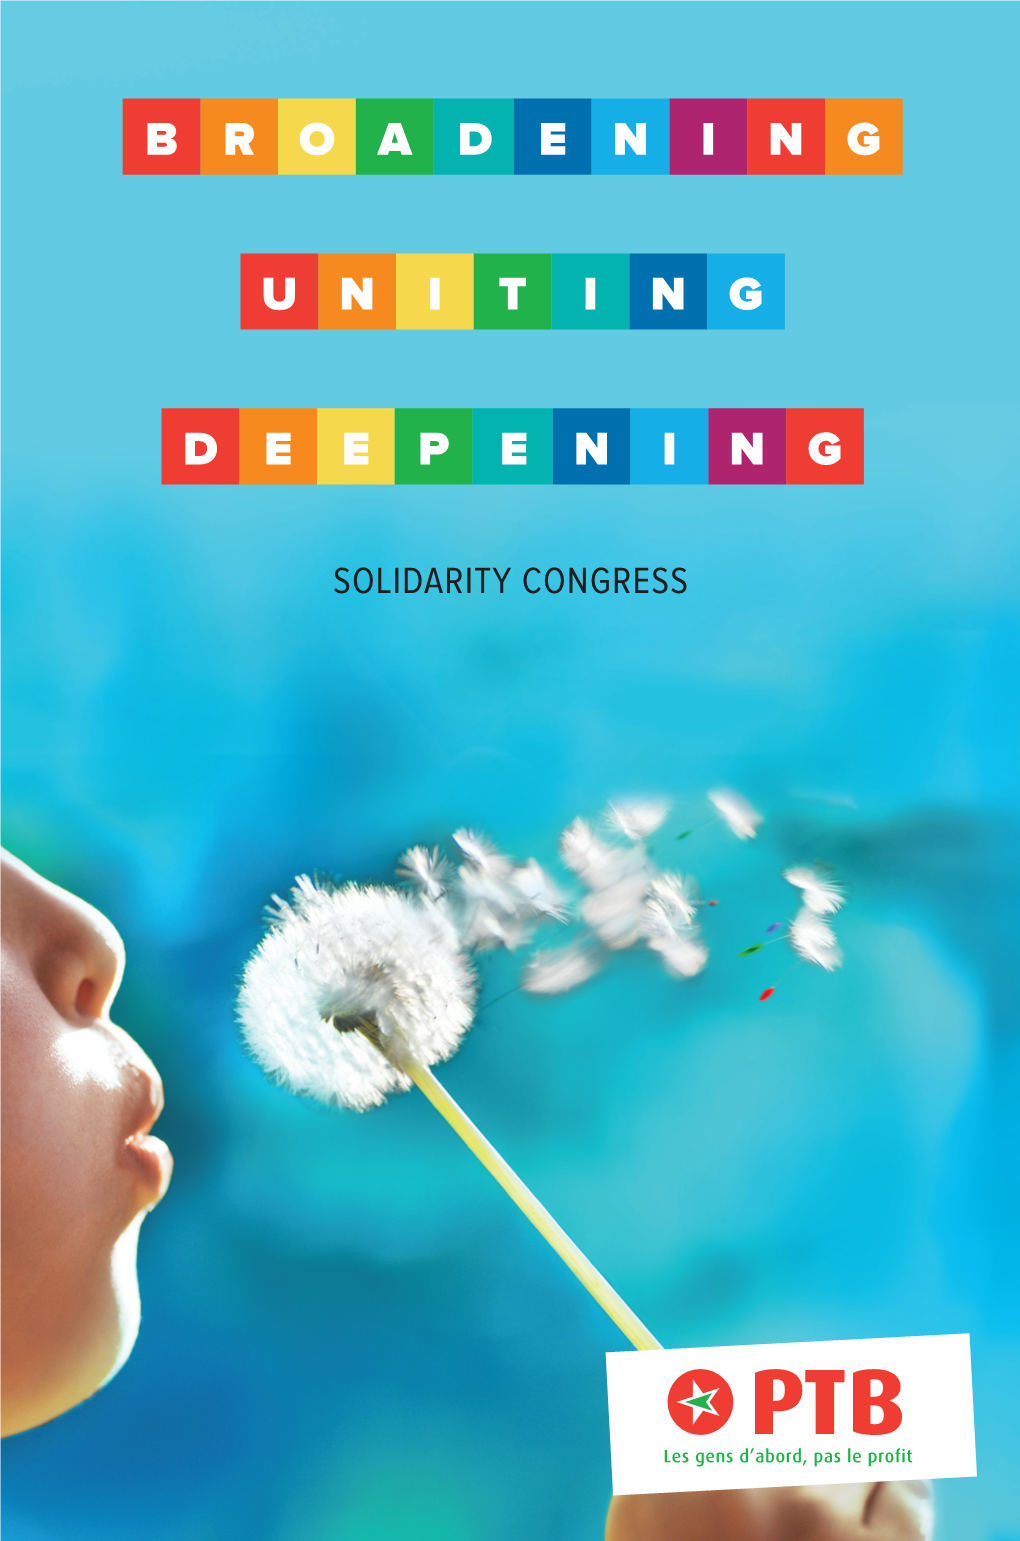 Solidarity Congress Broadening - Uniting Deepening Broadening